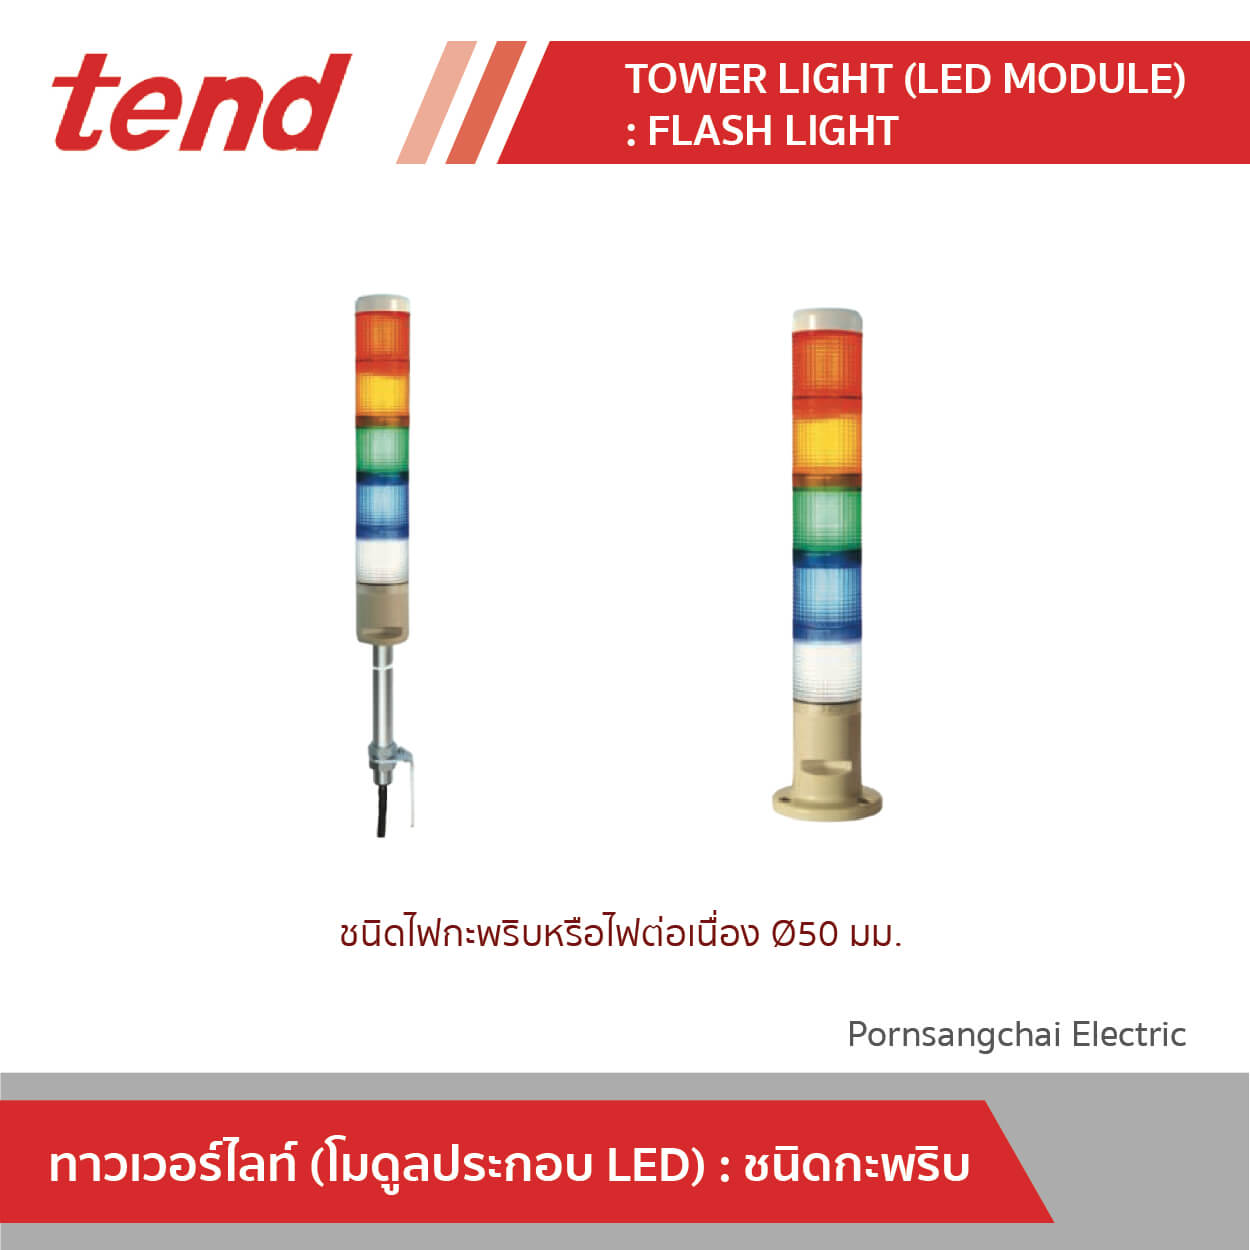 tend Tower Light (LED MODULE) : Flash Light